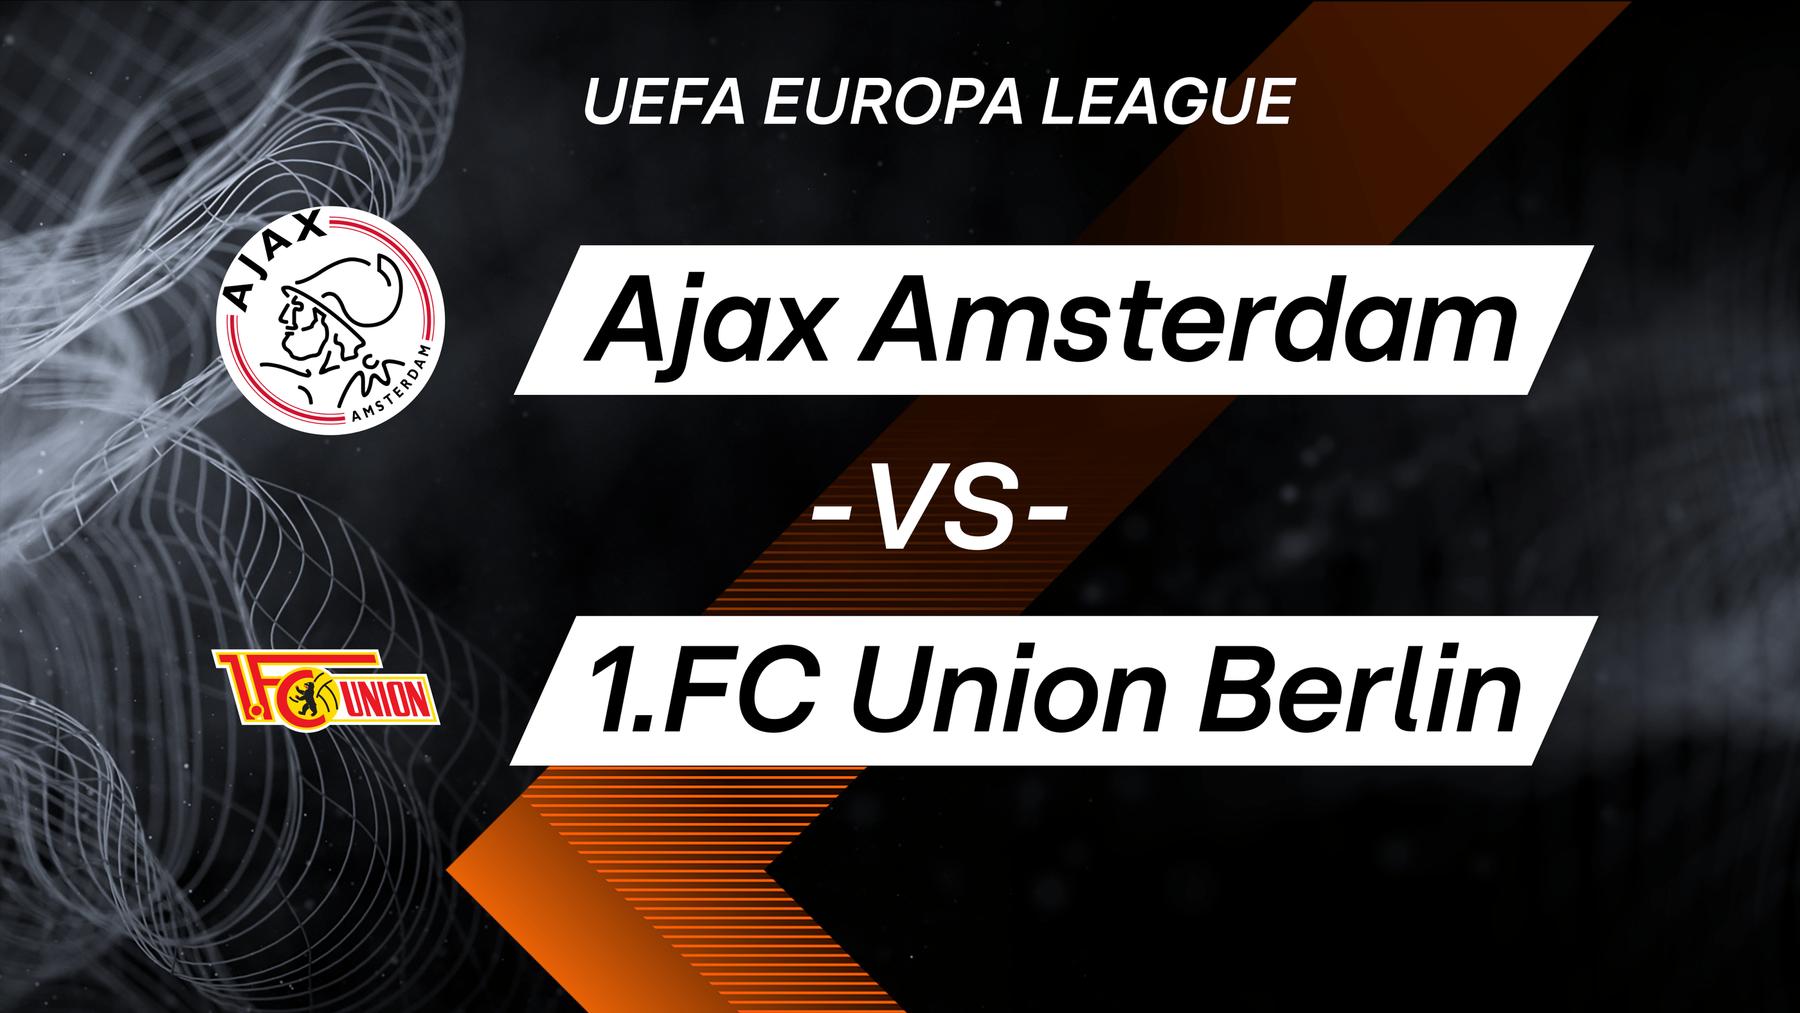 Ajax Amsterdam vs. Union Berlin